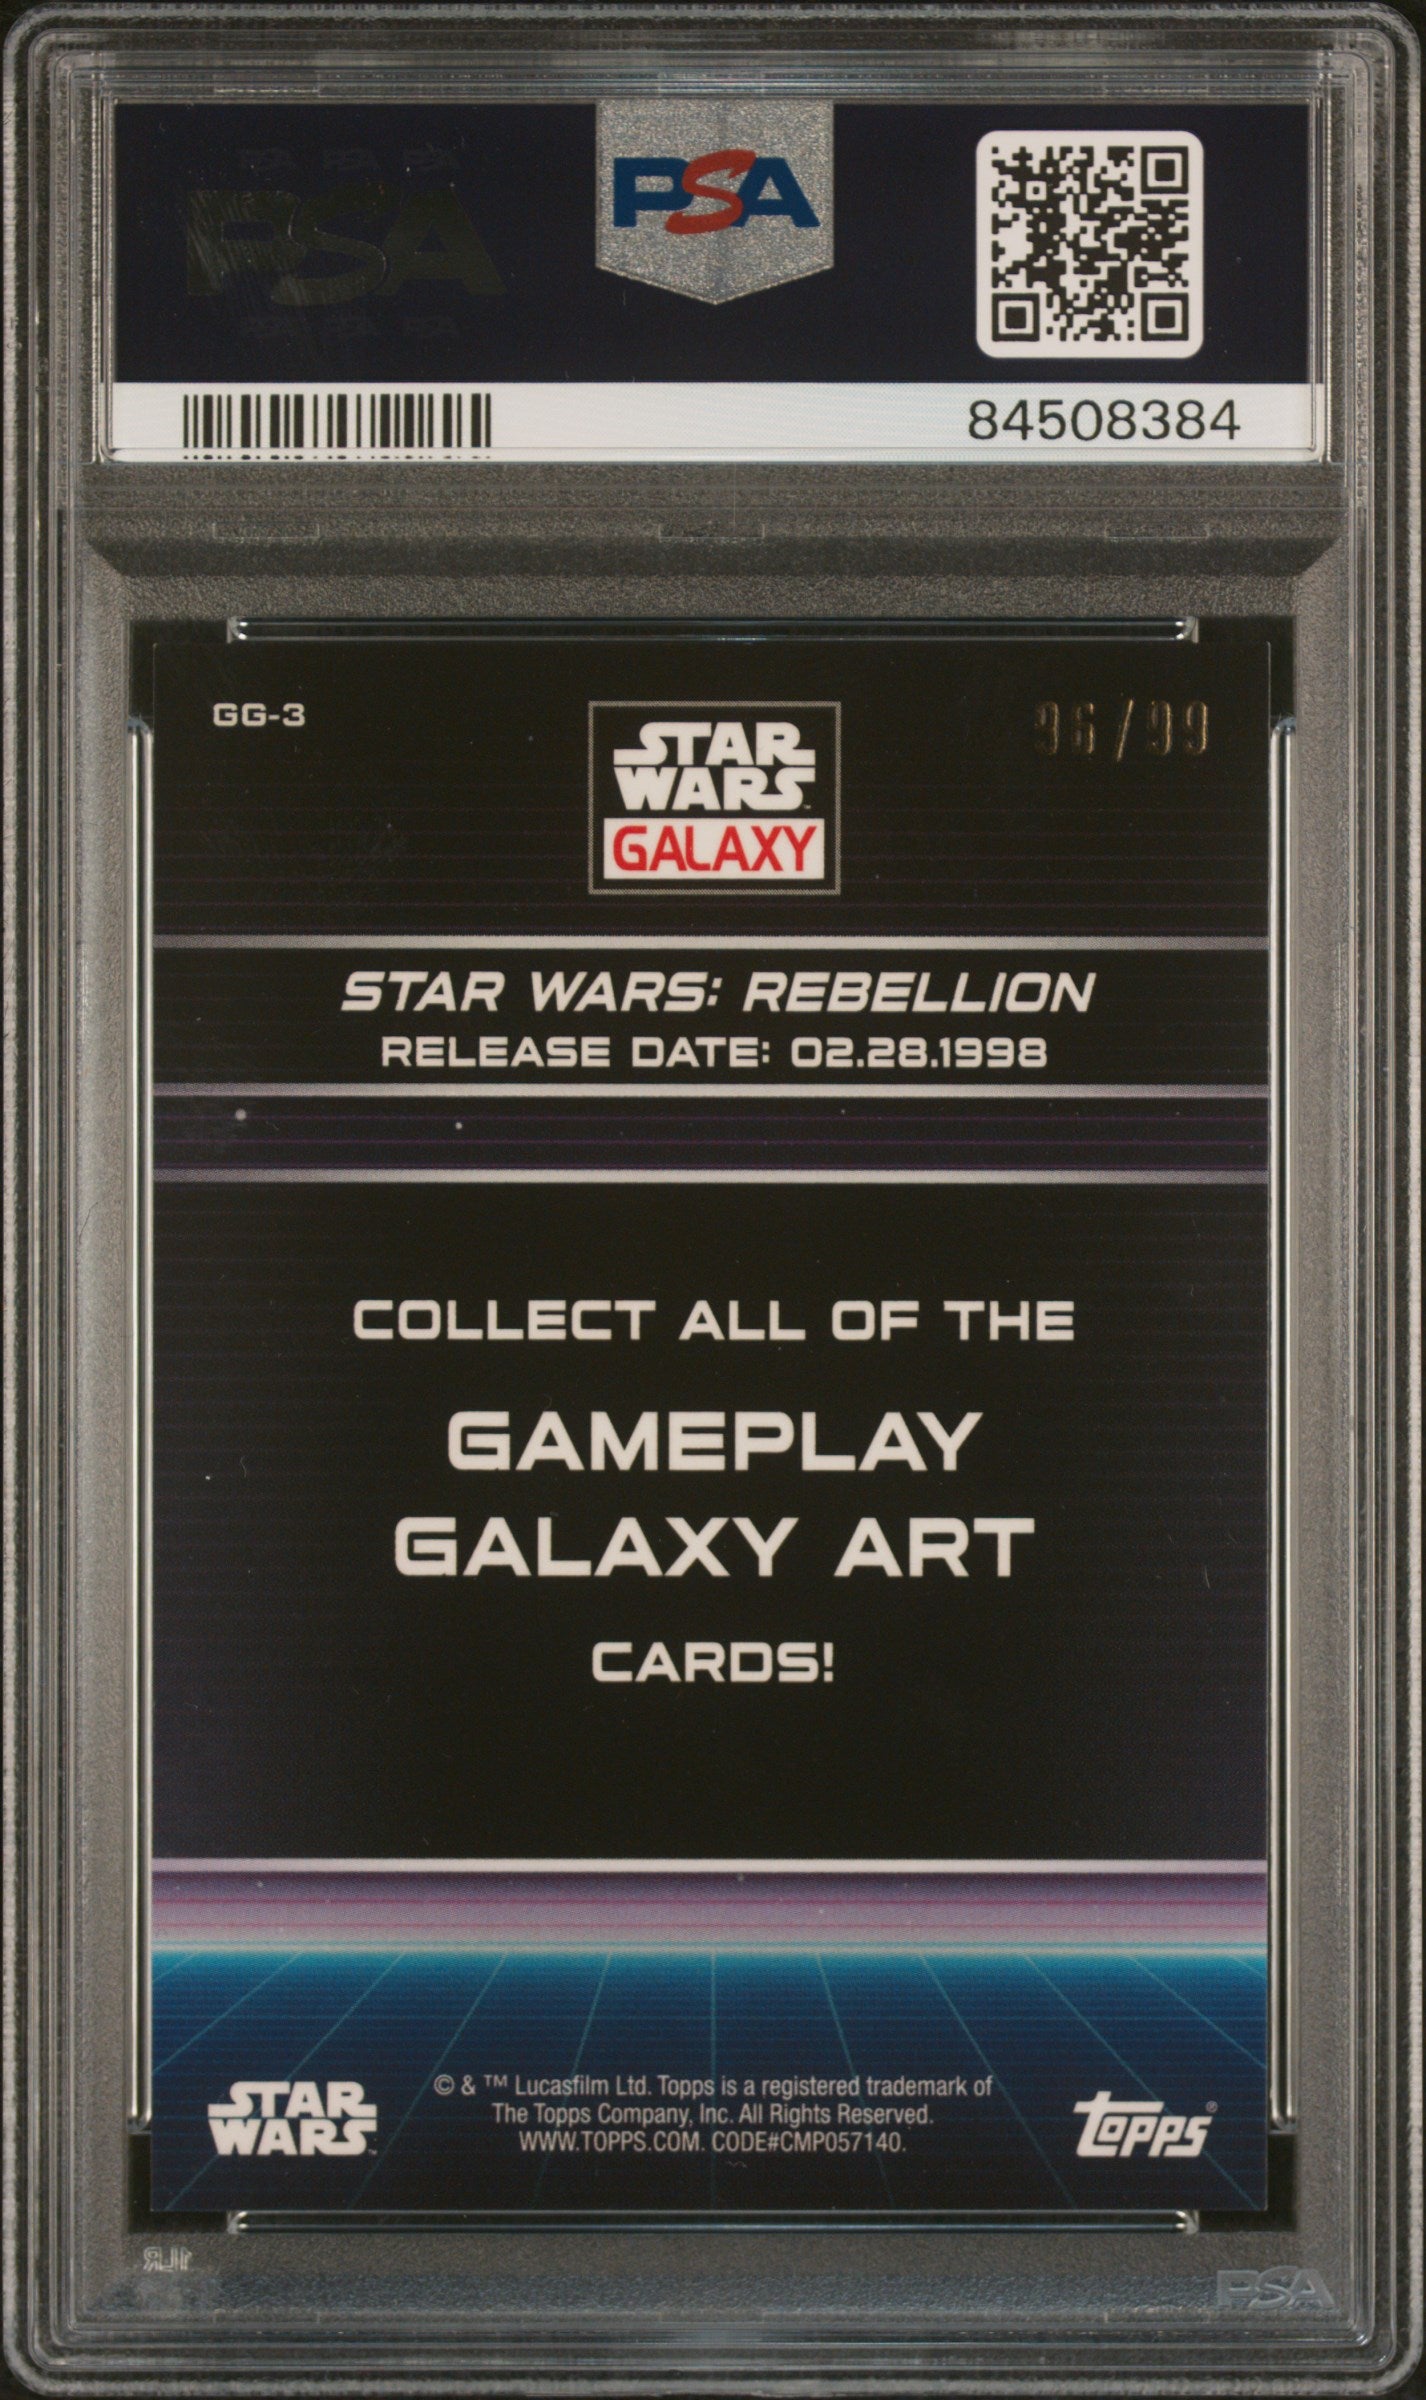 2022 Topps Chrome Star Wars Galaxy Gameplay Galaxy Star Wars: Rebellion #GG3 PSA 10